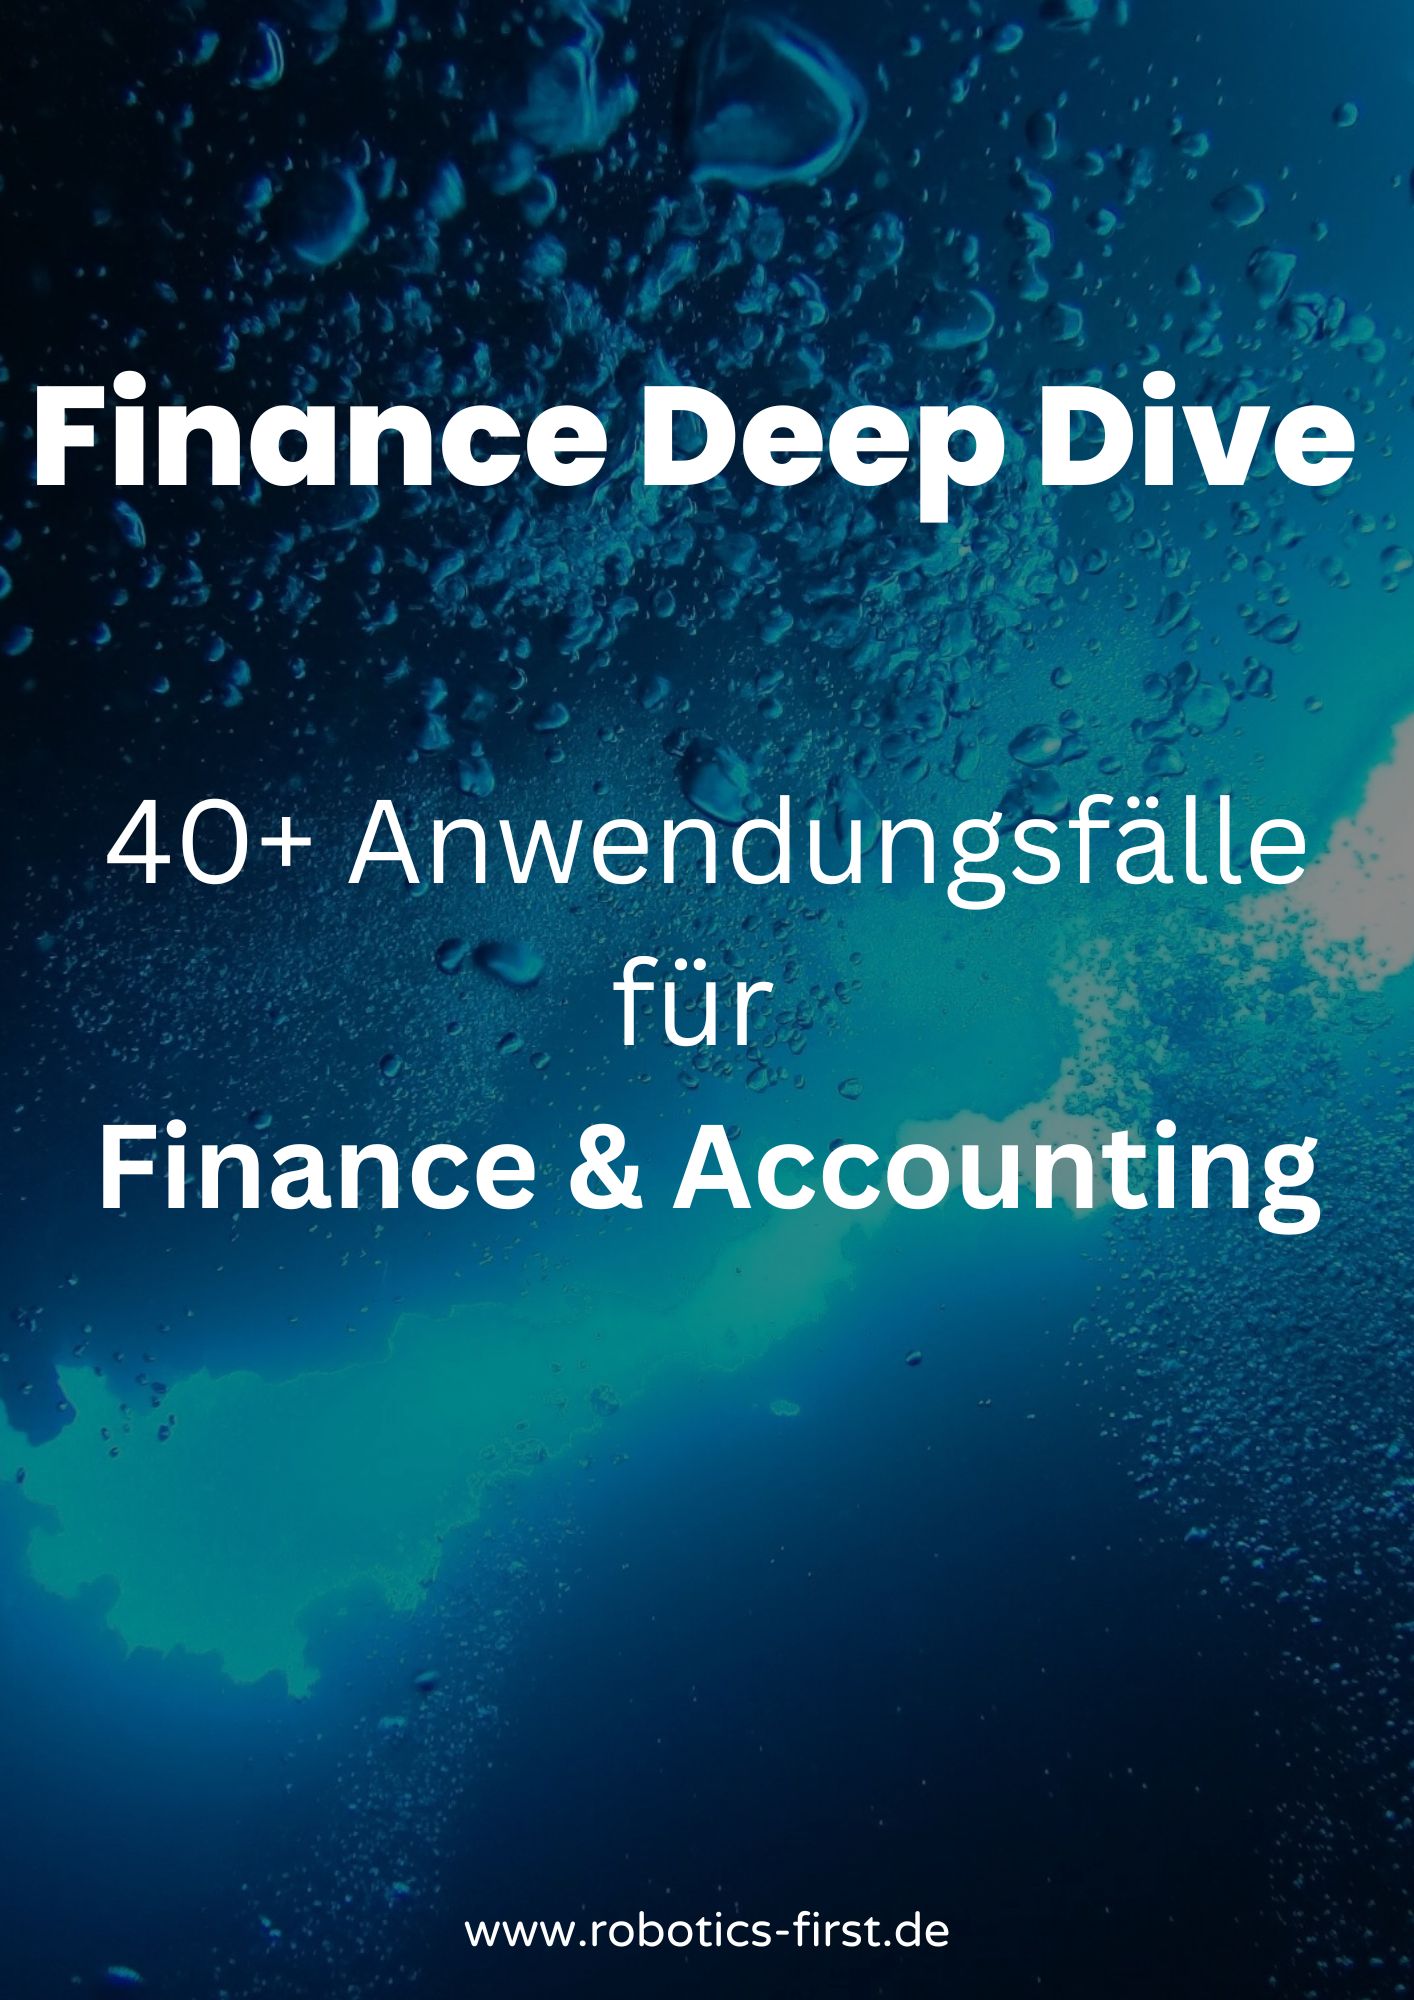 Deep Dive Finance and Accounting - 40+ Anwendungsfälle